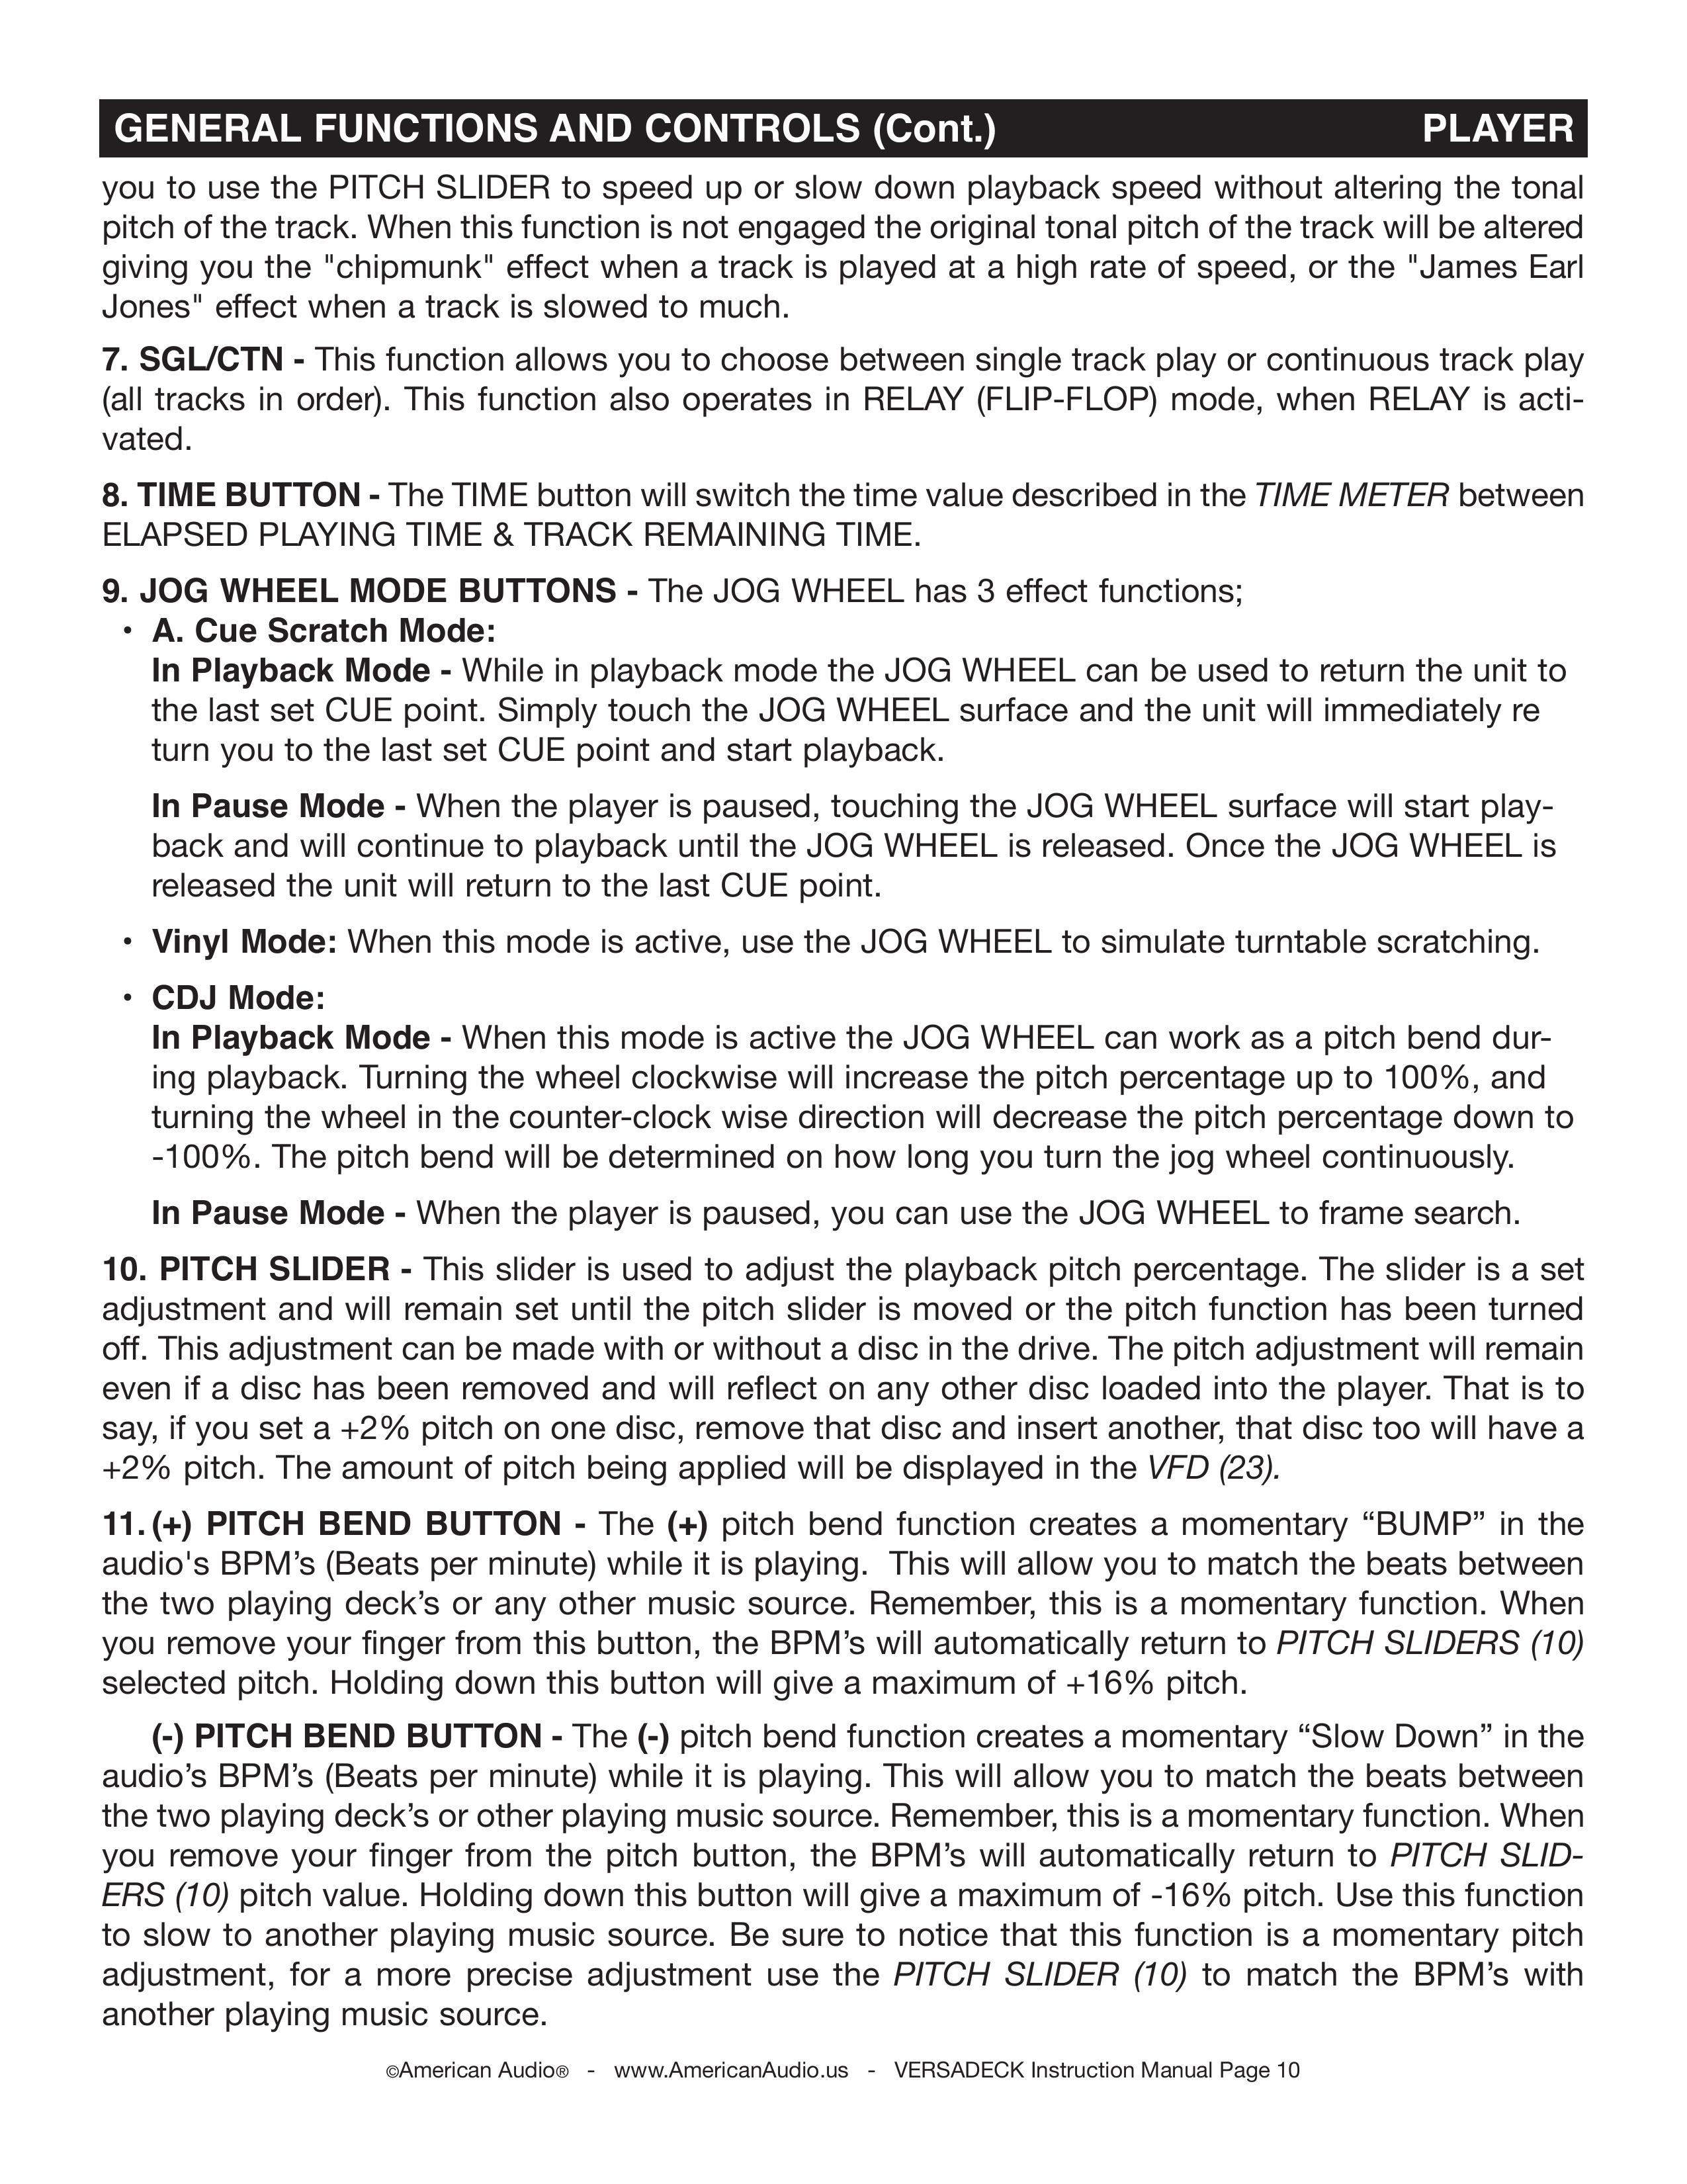 American Audio Versadeck DJ Equipment User Manual (Page 10)